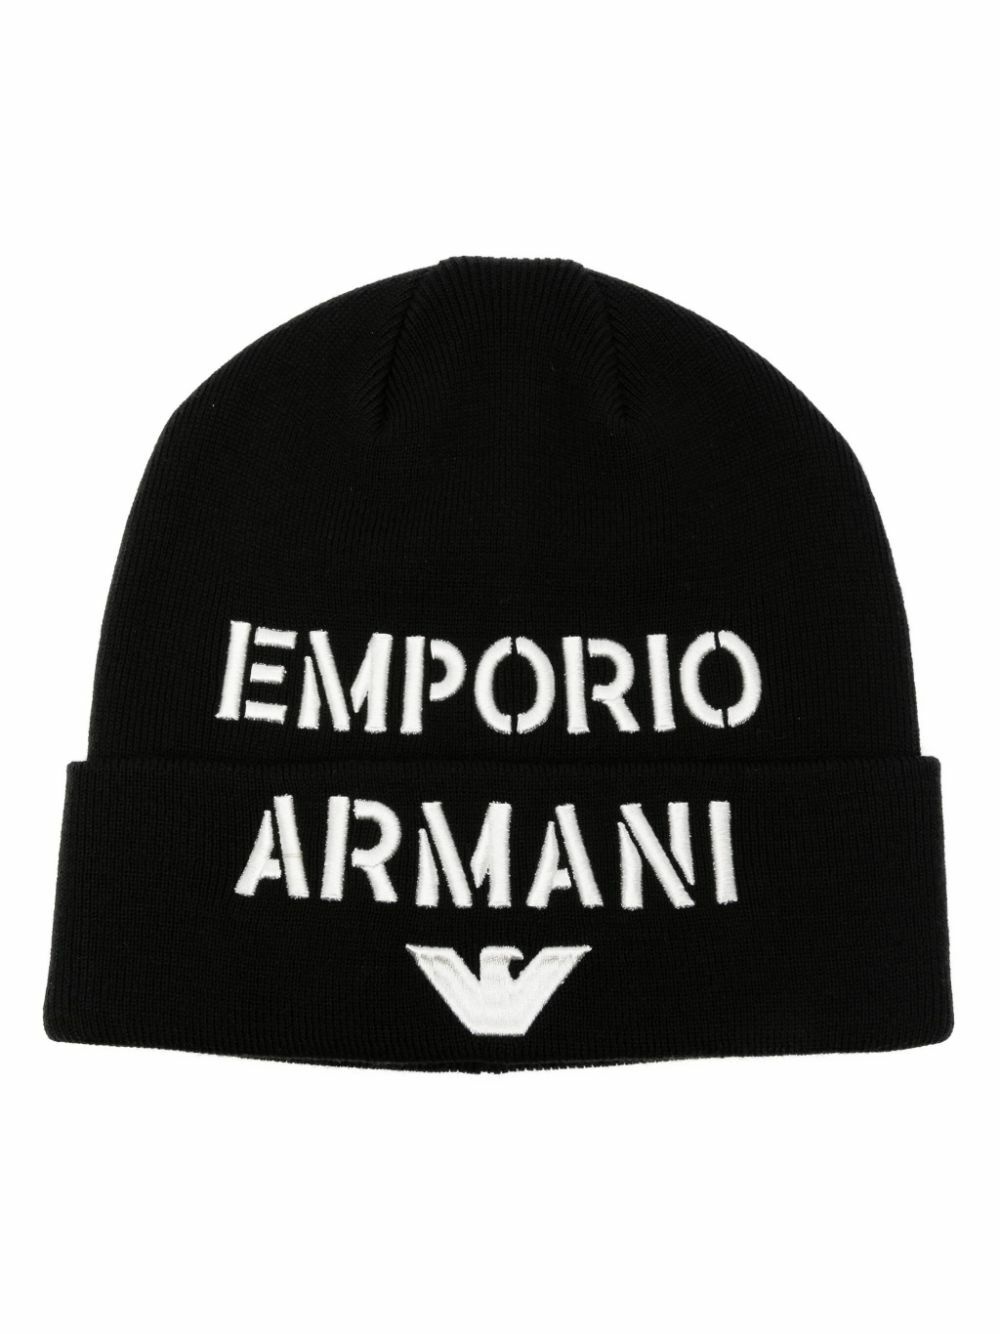 EMPORIO ARMANI - Logo Wool Blend Beanie